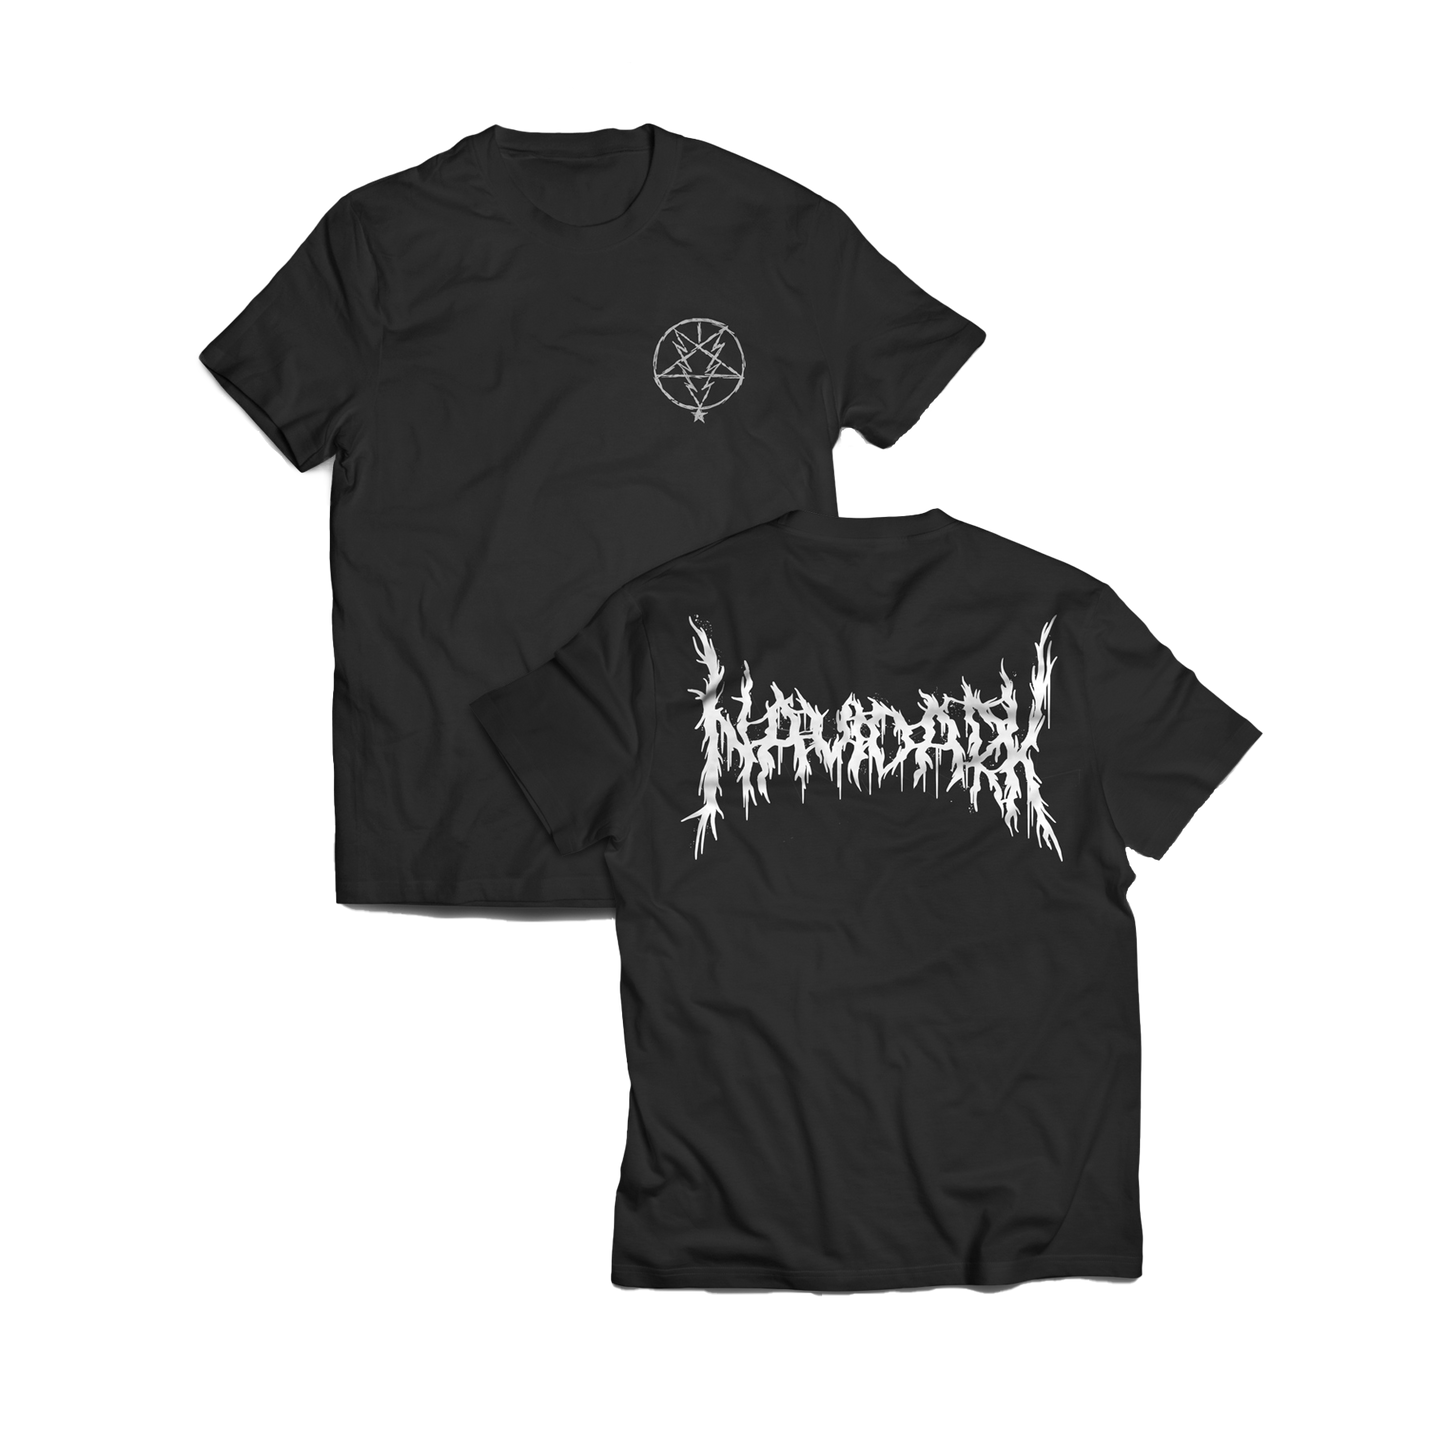 "Deathmetal" T-shirt